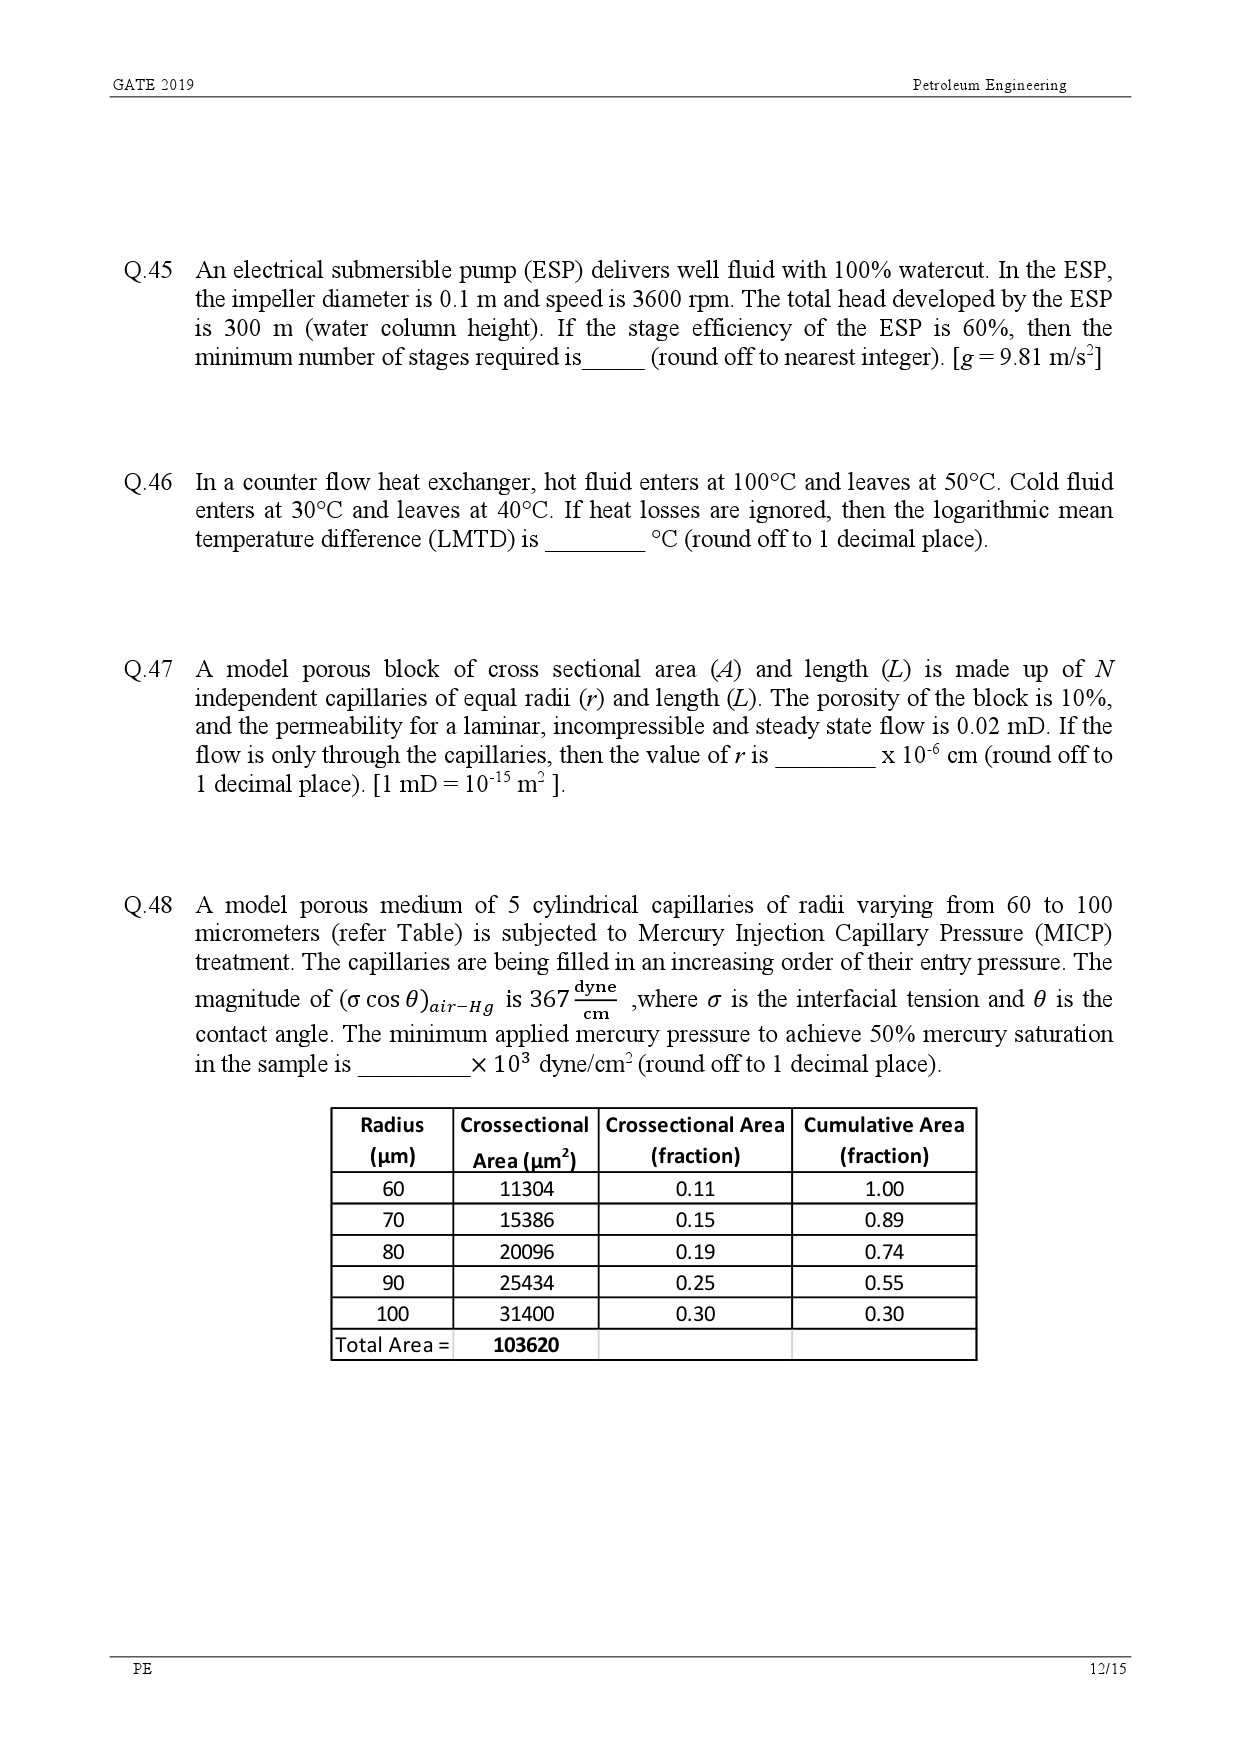 GATE Exam Question Paper 2019 Petroleum Engineering 15